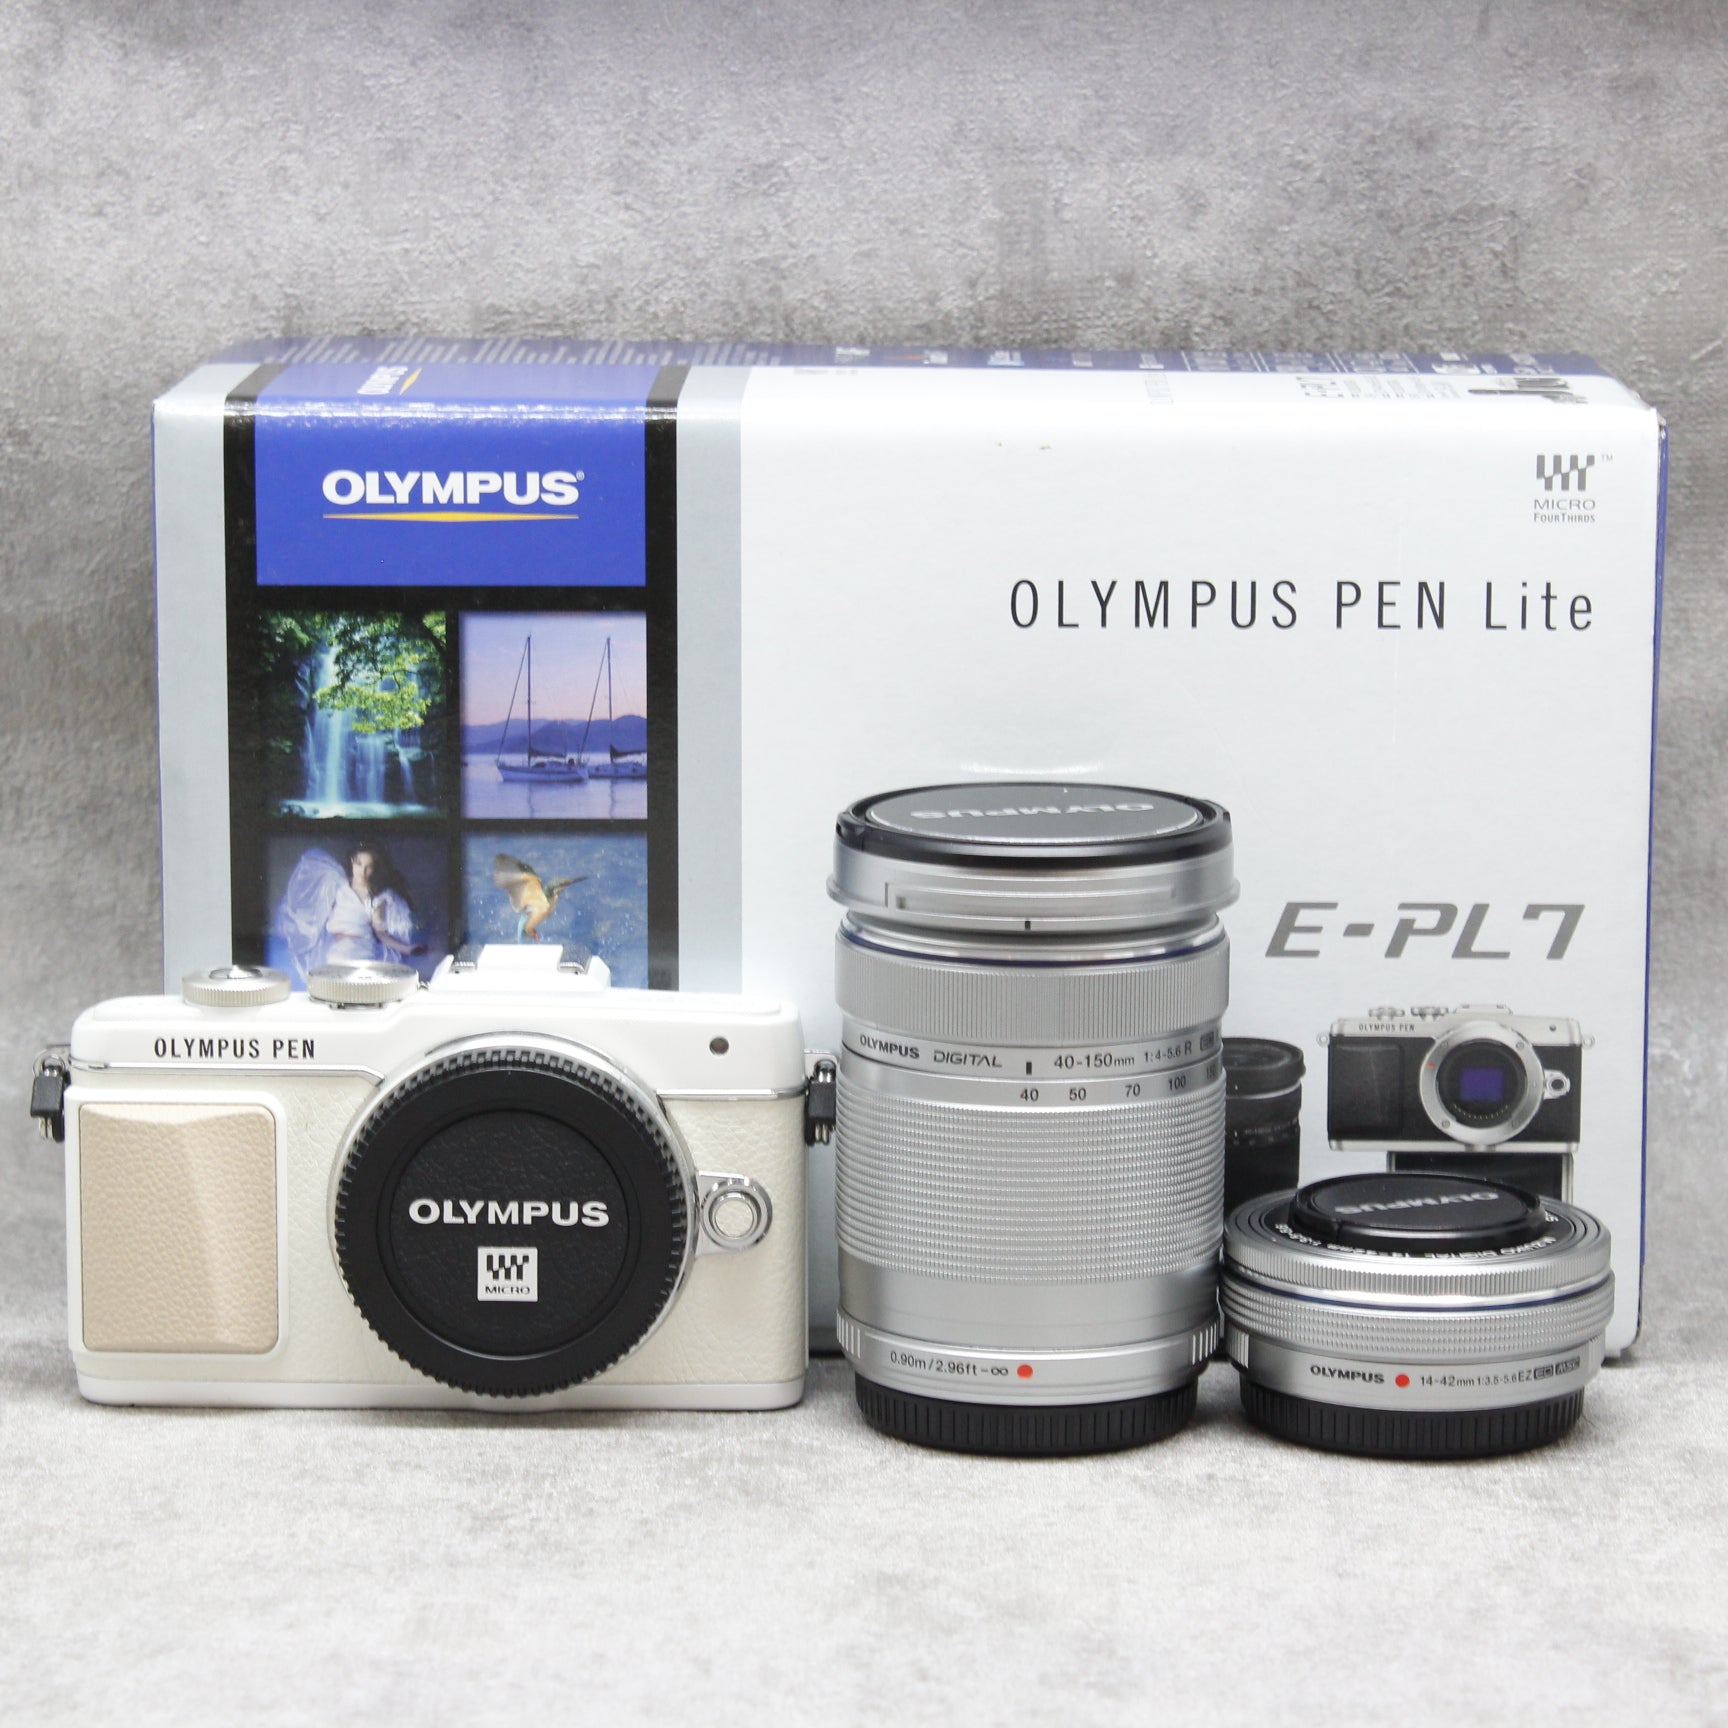 OLYMPUS PEN Lite E-PL7 WHITE ダブルズームキット - デジタルカメラ